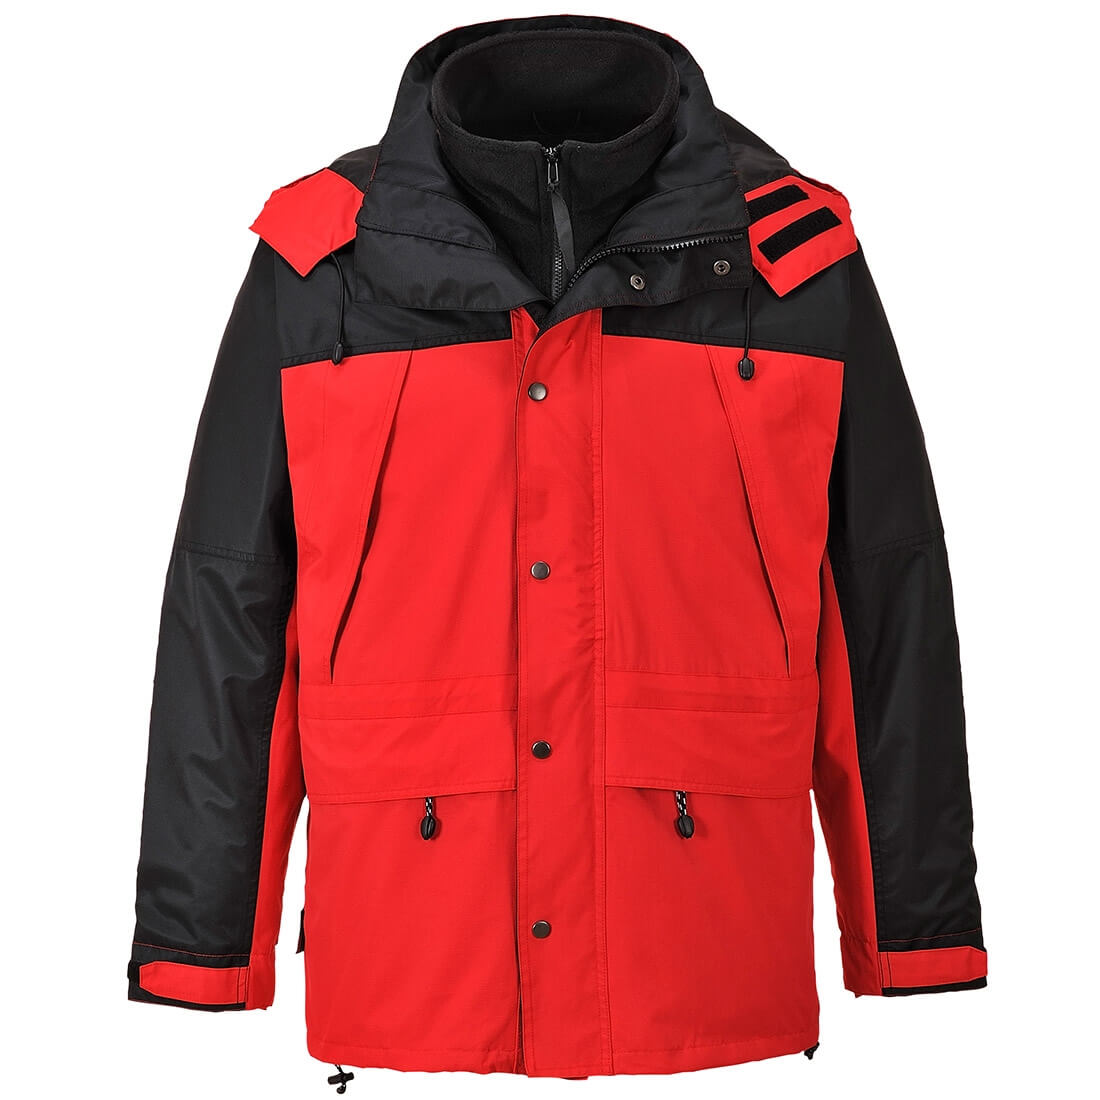 Orkney 3 in 1 Breathable Jacket - Safetywear